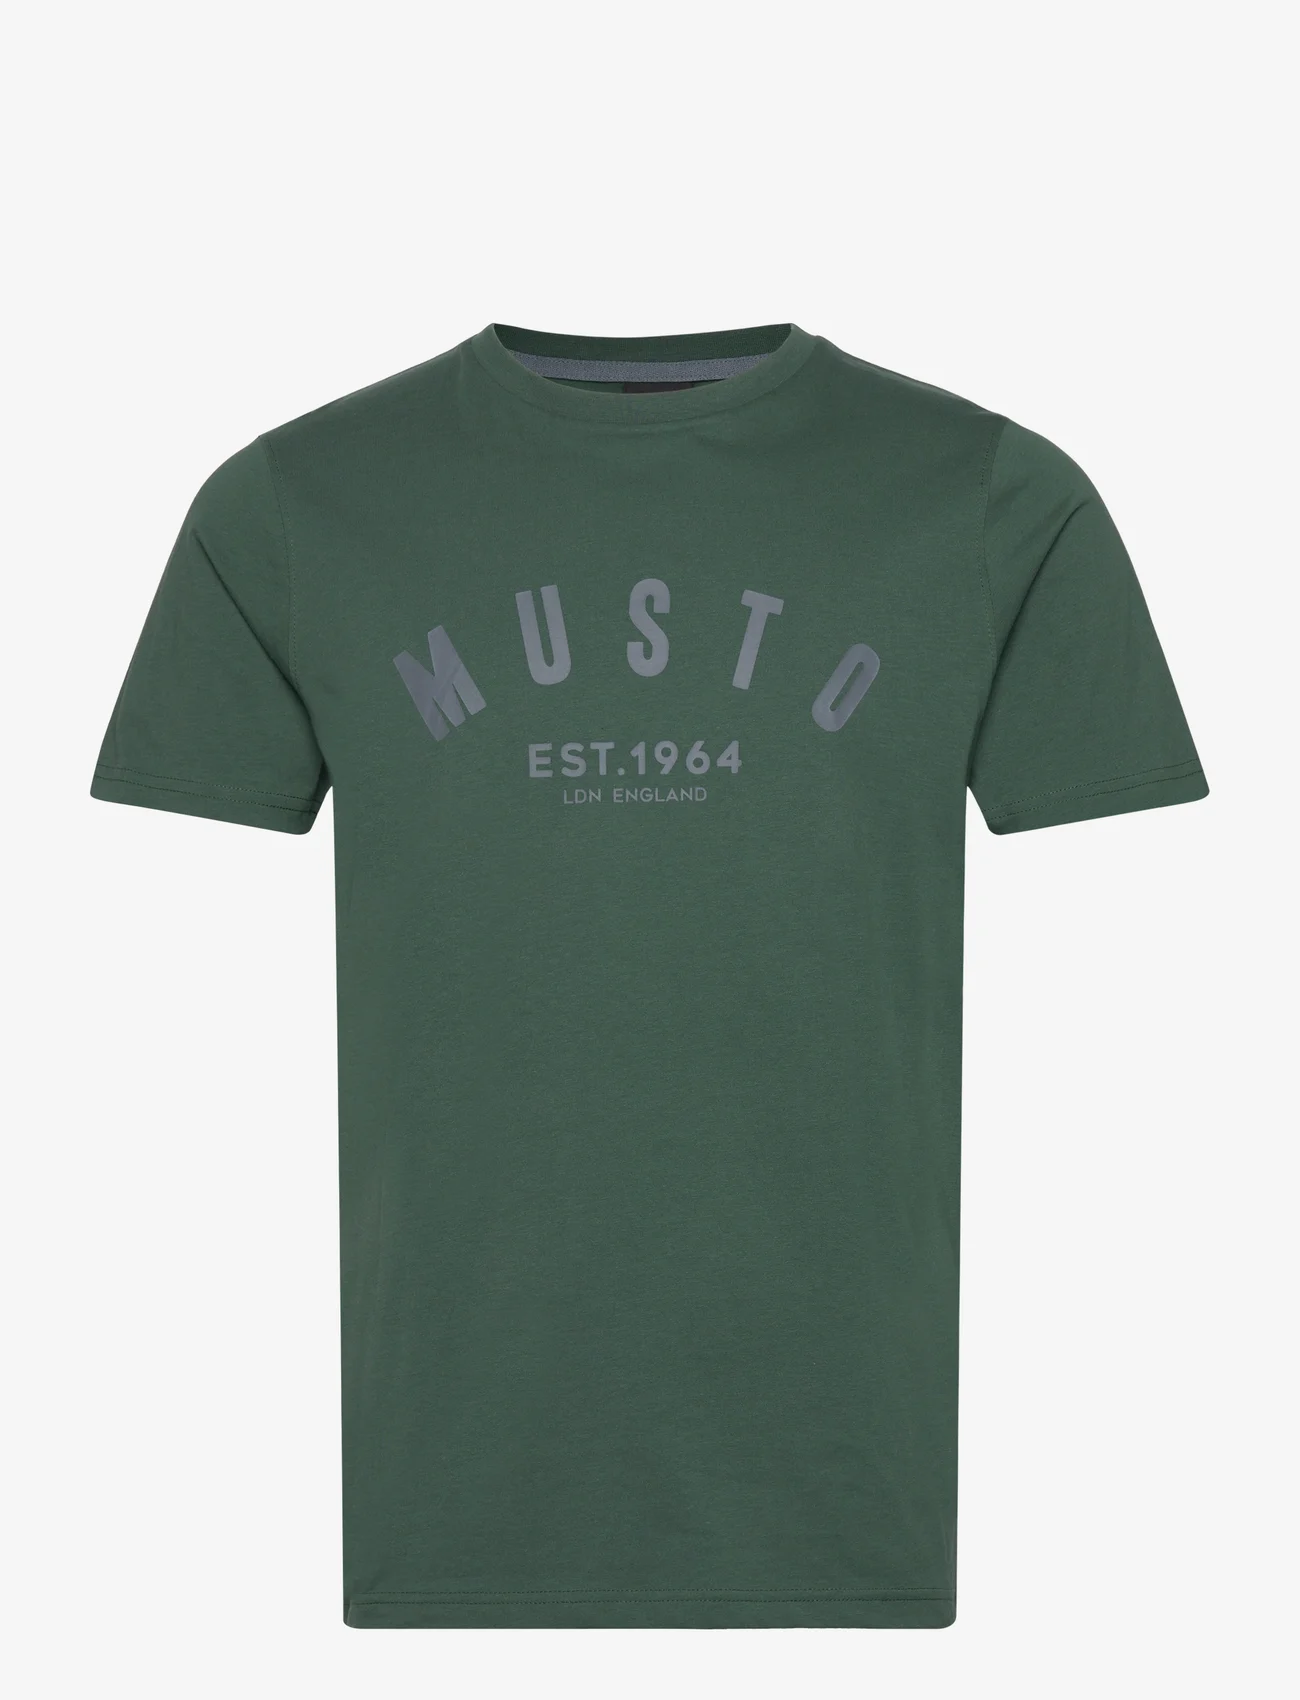 Musto - M MARINA MUSTO SS TEE - short-sleeved t-shirts - garden topiary - 0